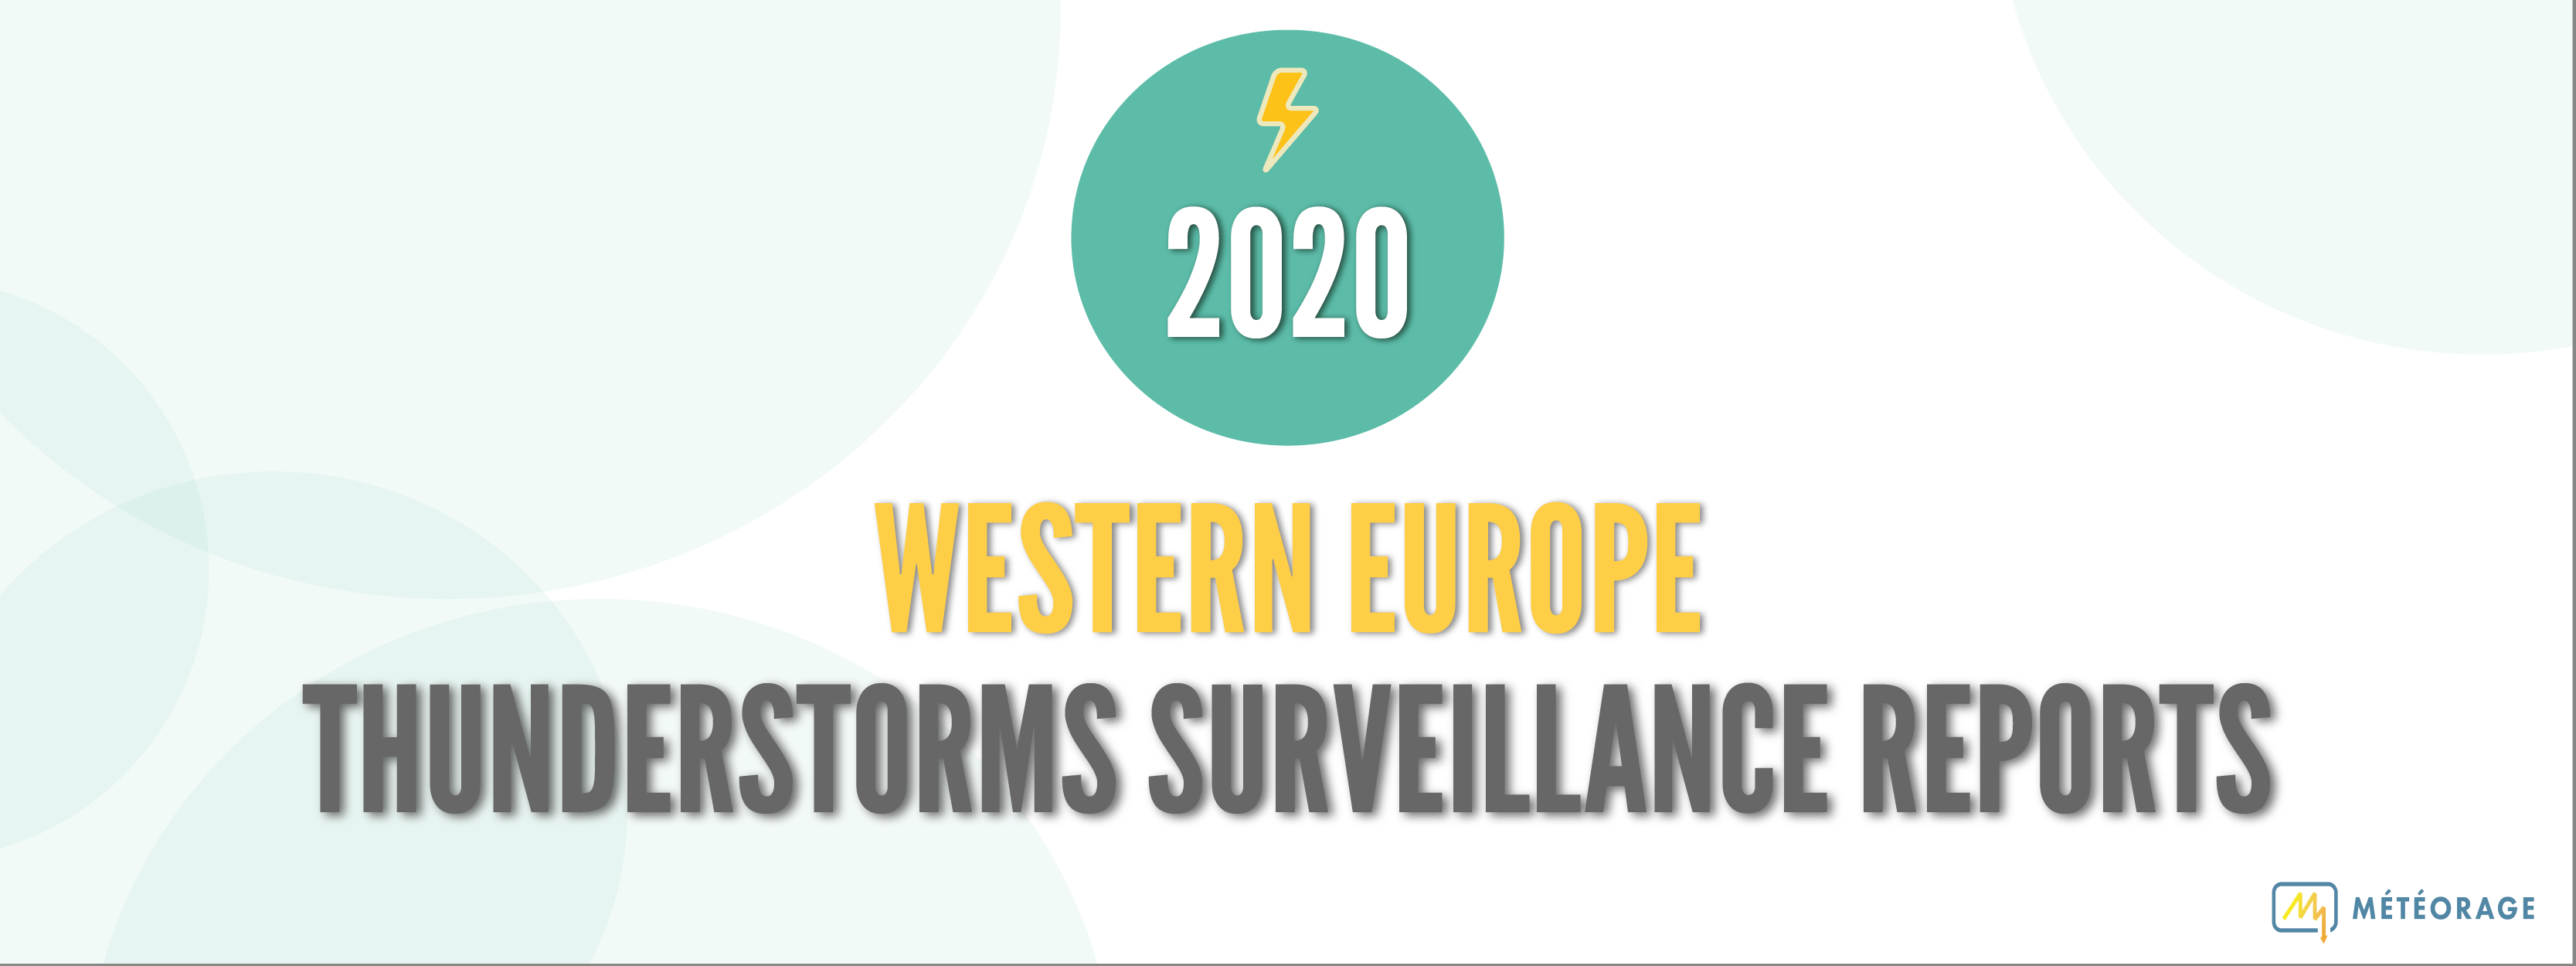 Thunderstorms surveillance report 2020  Western Europe